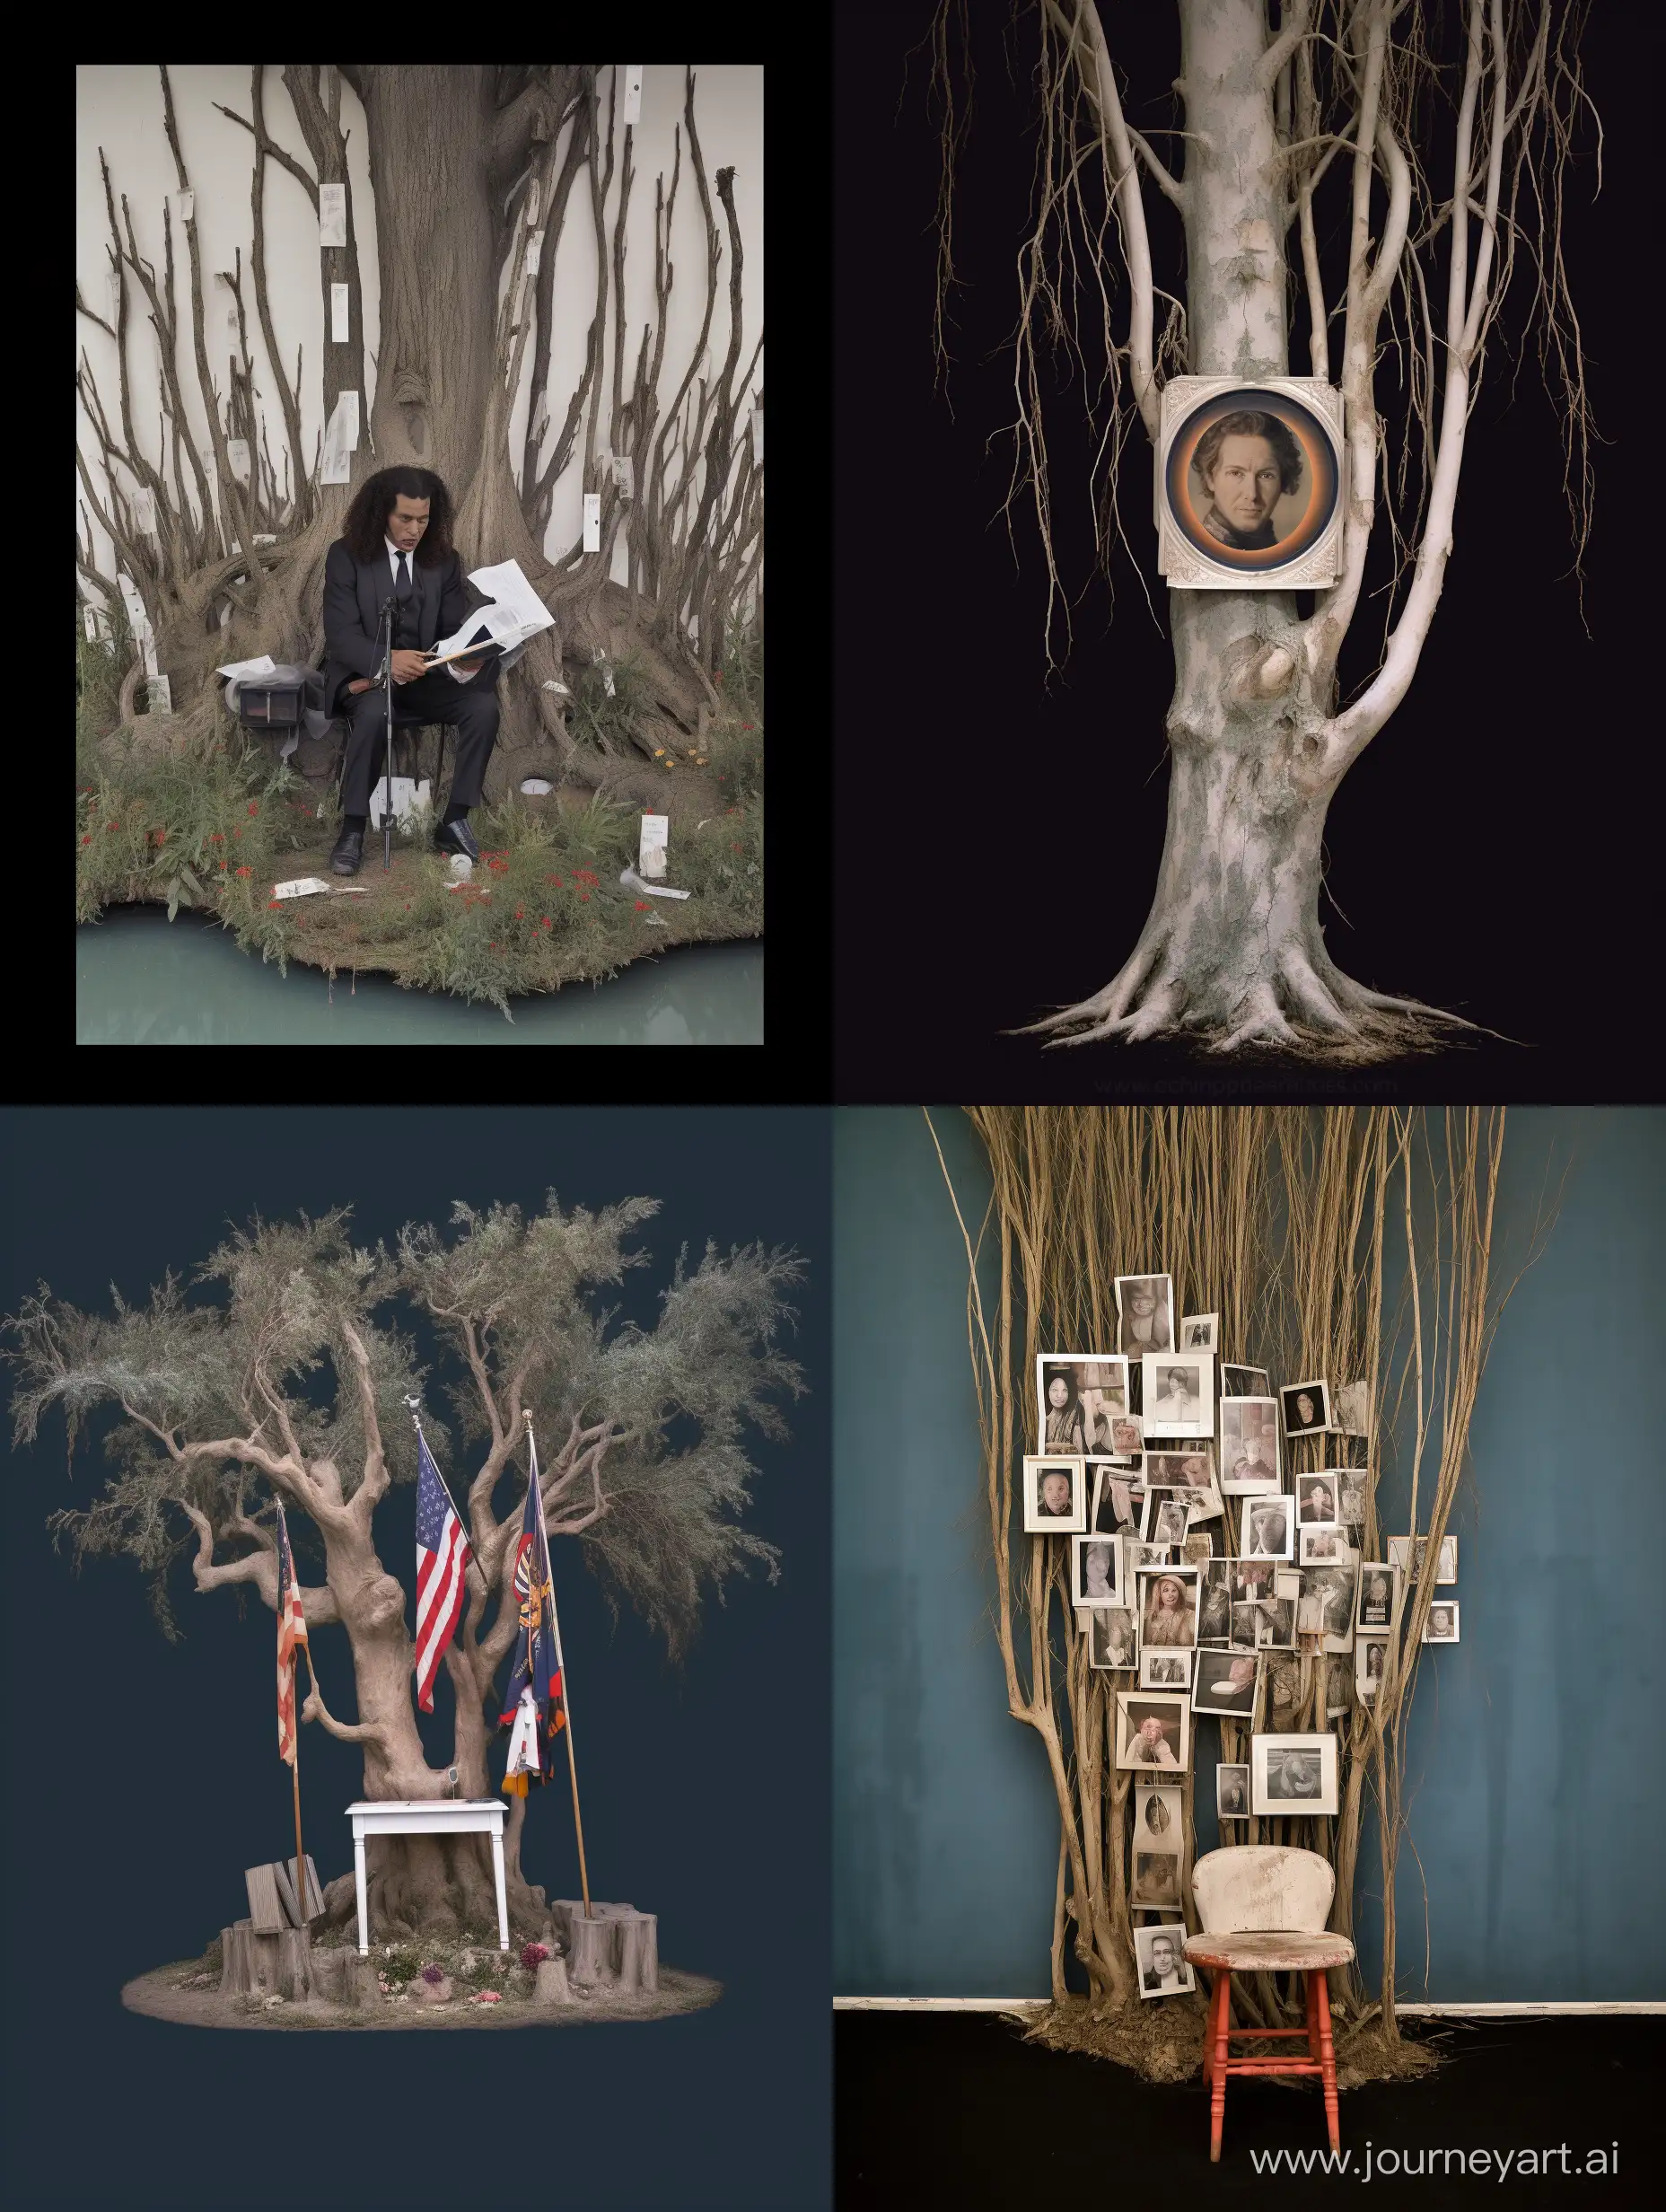 Disturbing-Nightmarish-Scene-Weeping-Willow-Tree-and-Exposed-Bones